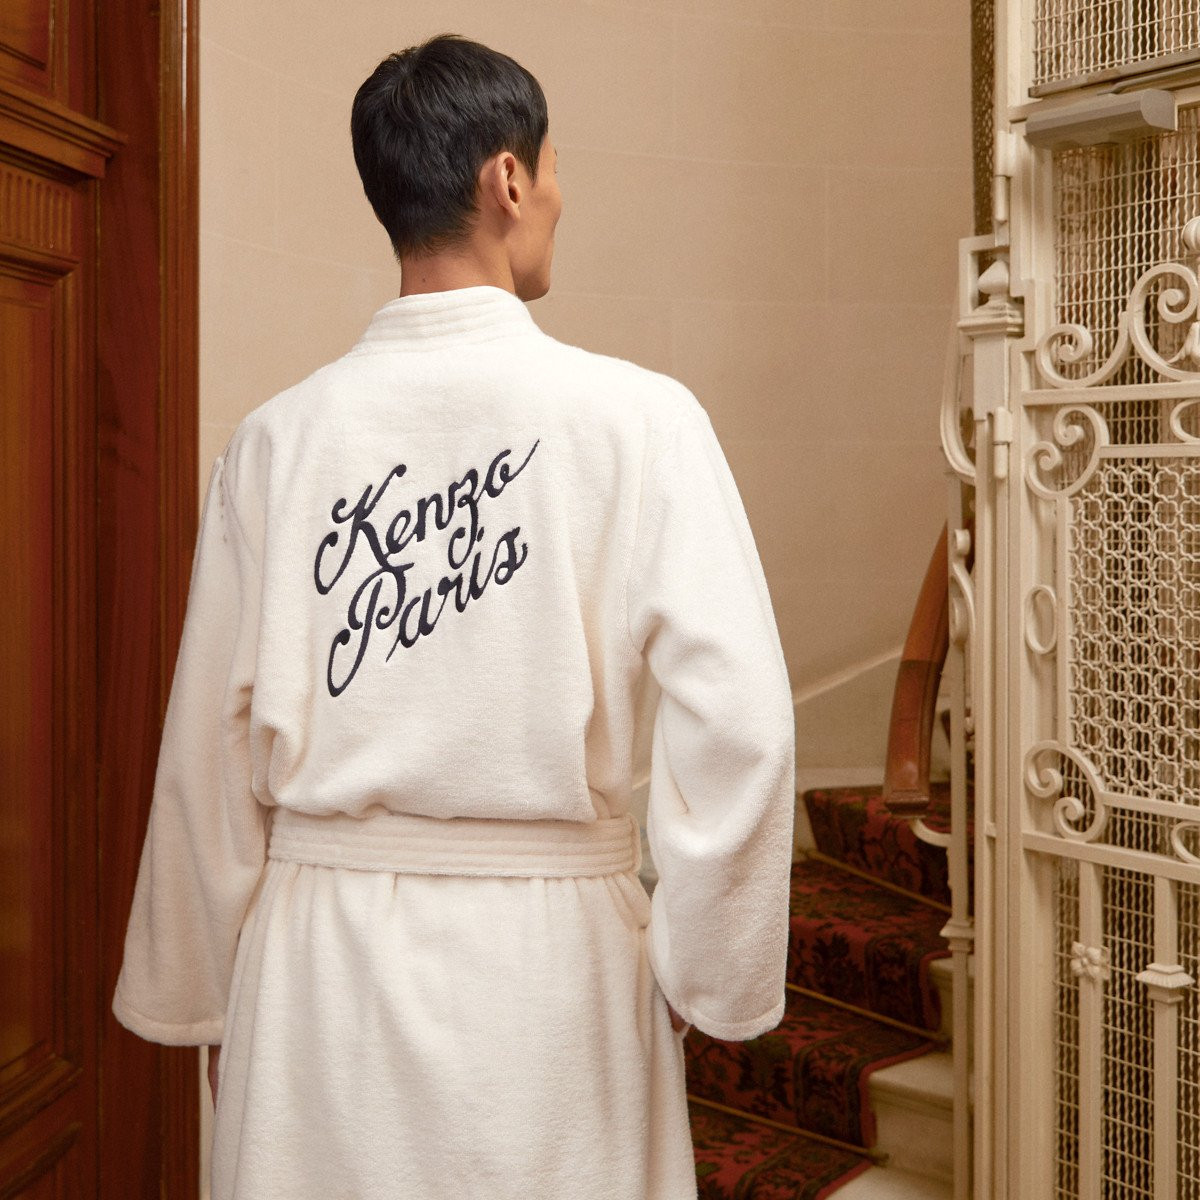 халат кимоно Kenzo Varsity - купить в магазине Yves Delorme Russia